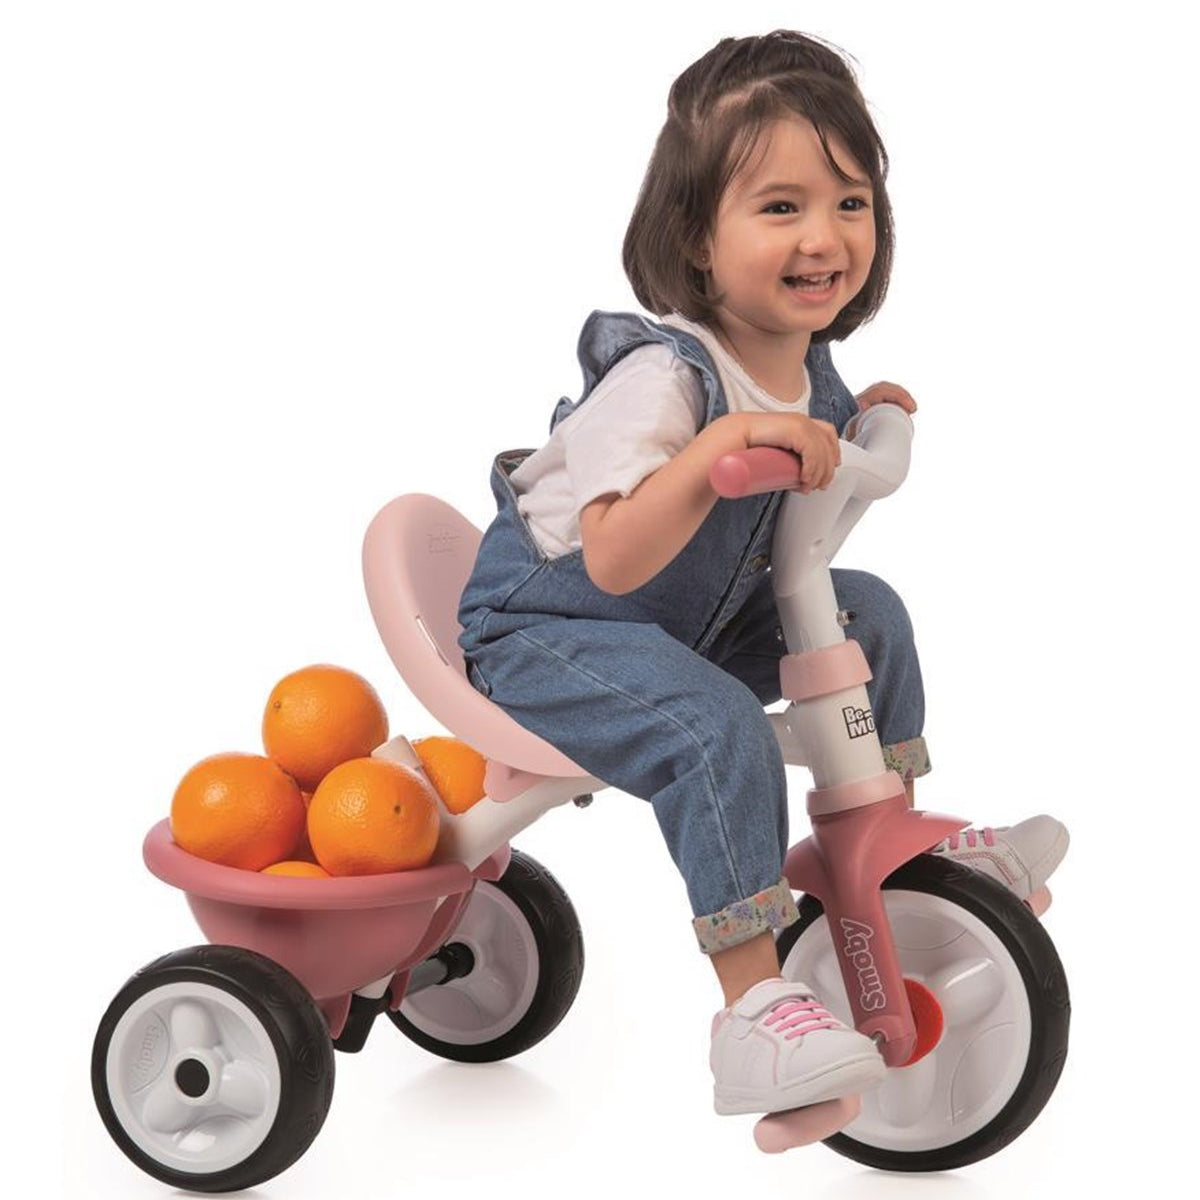 Smoby Be Move Üç Tekerlekli Bisiklet Seti - Pembe 740332 | Toysall